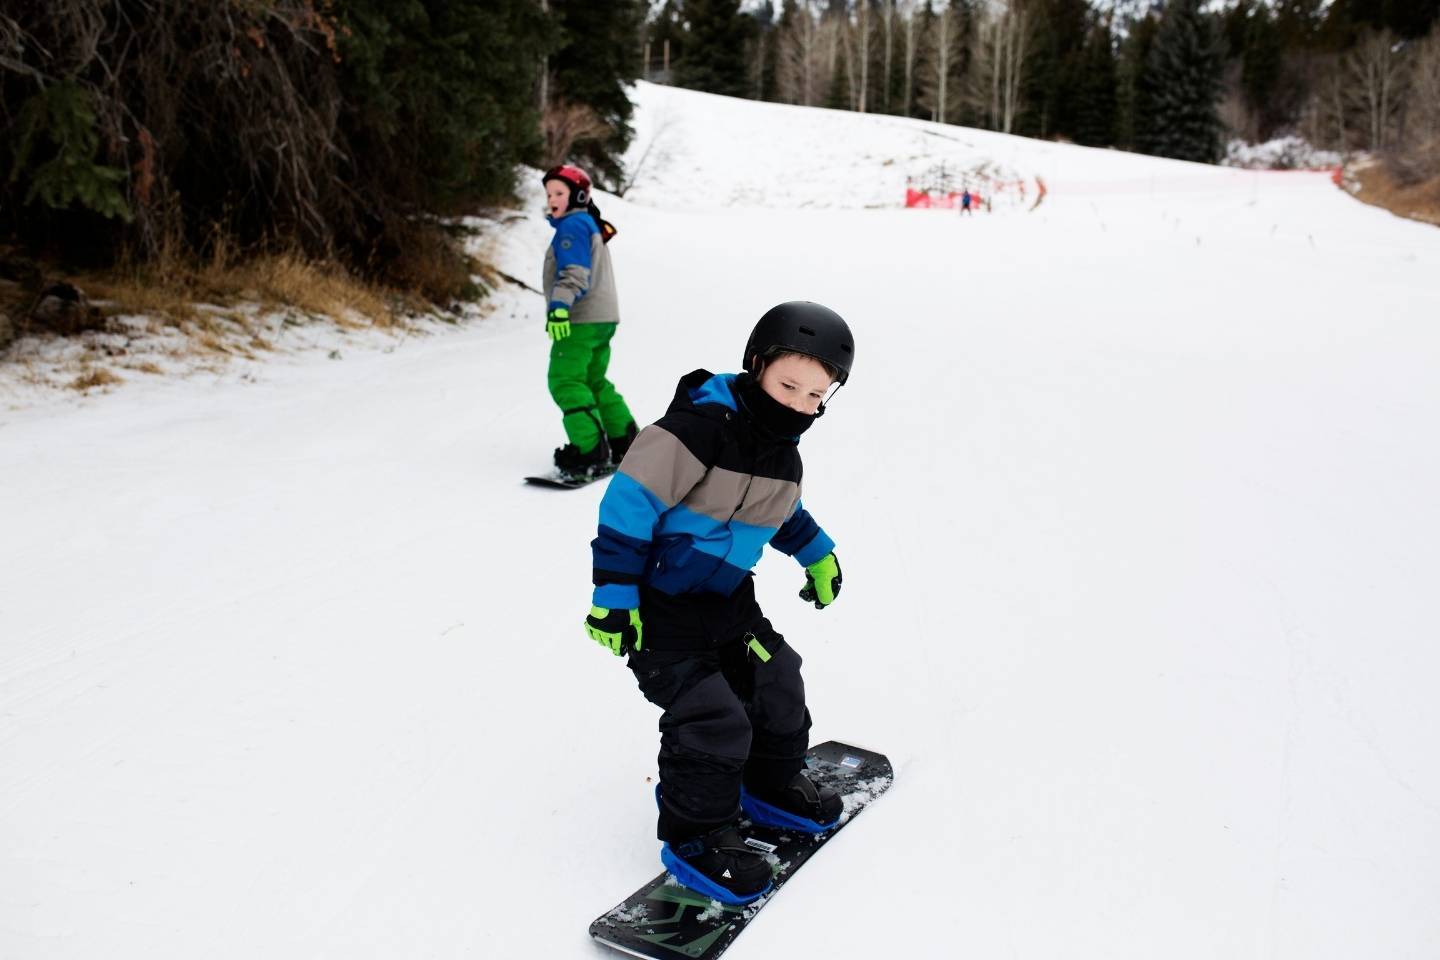 Kids snowboarding